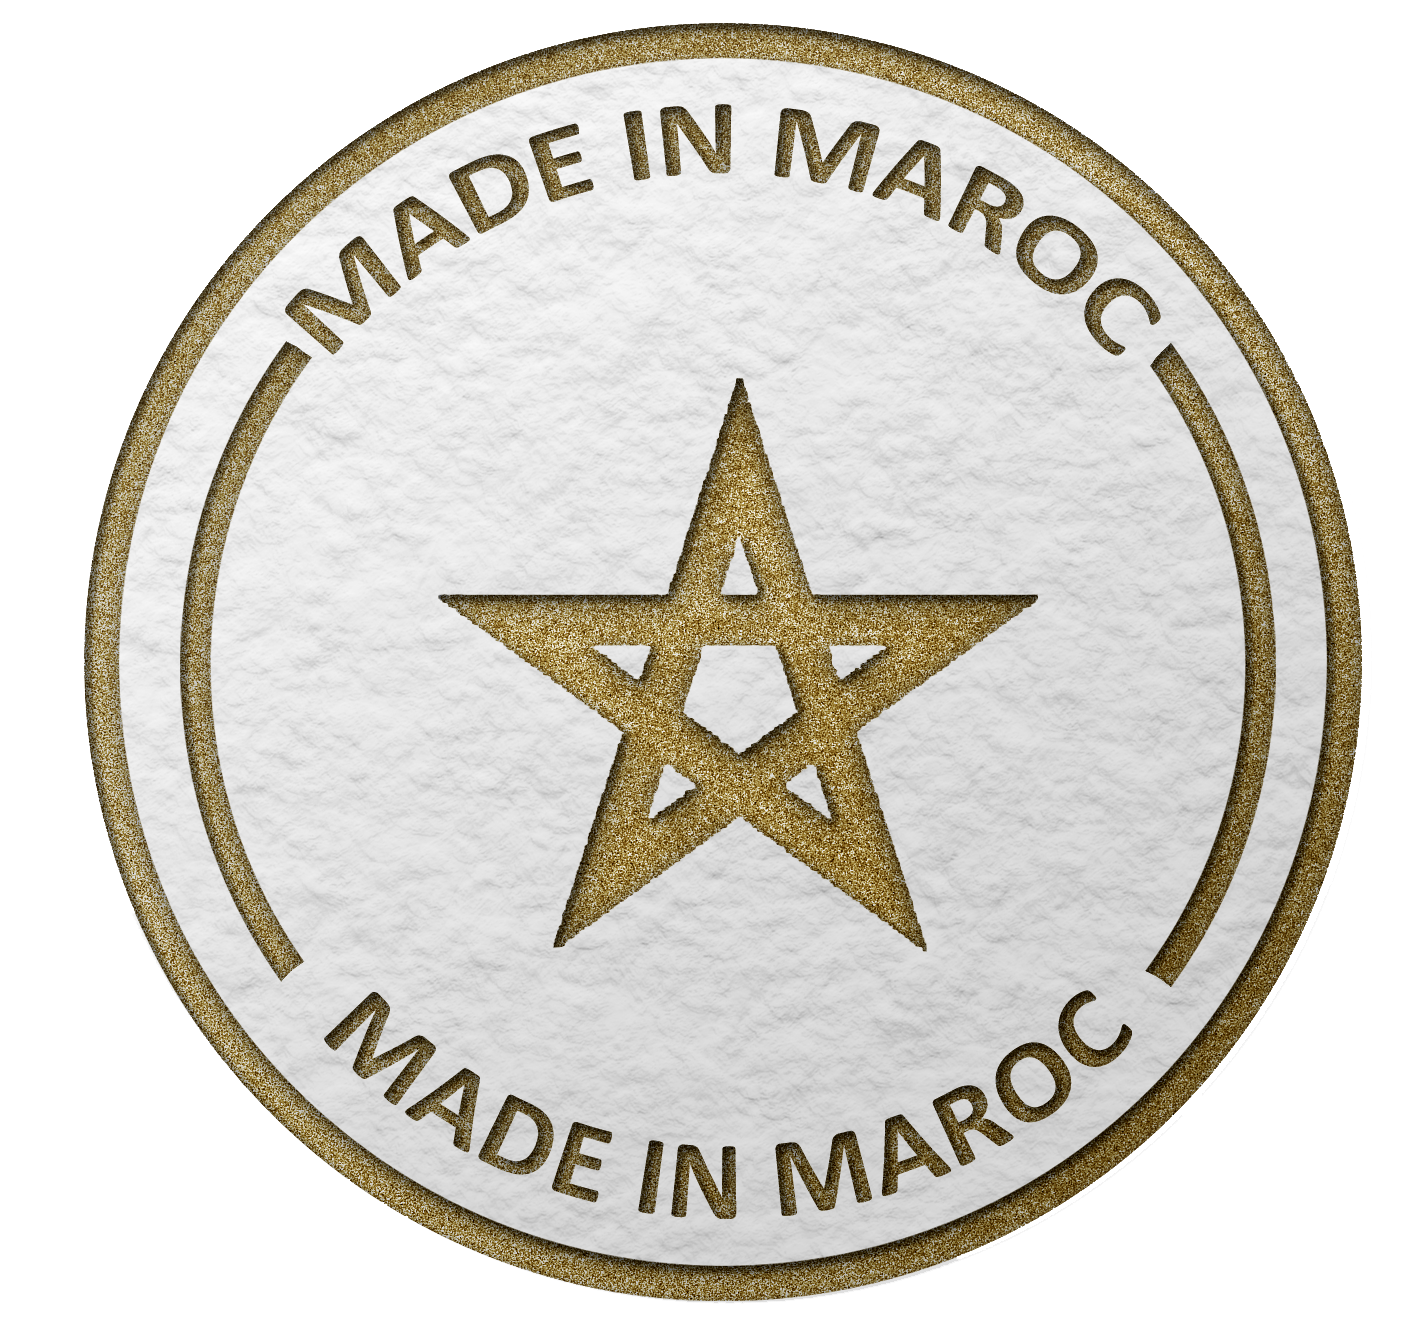 Made in Maroc